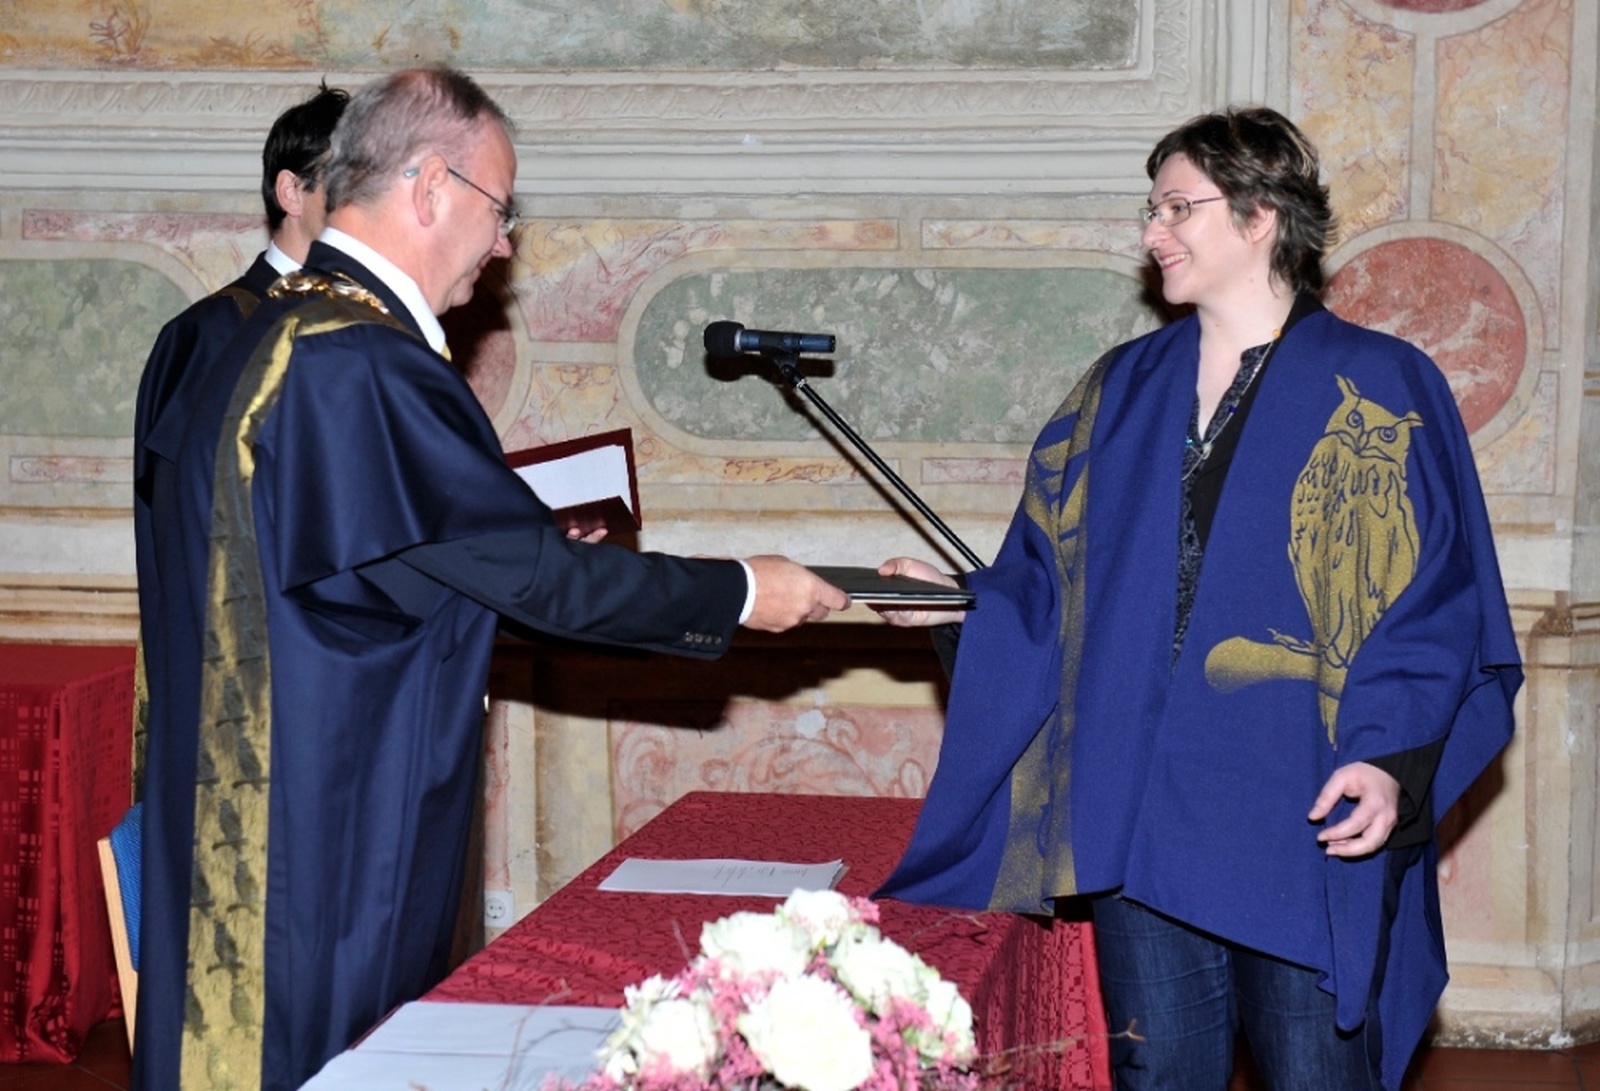 Dr. Iva Mrak, who earned her Ph.D. at the University of Nova Gorica, received an award for Best Dissertation